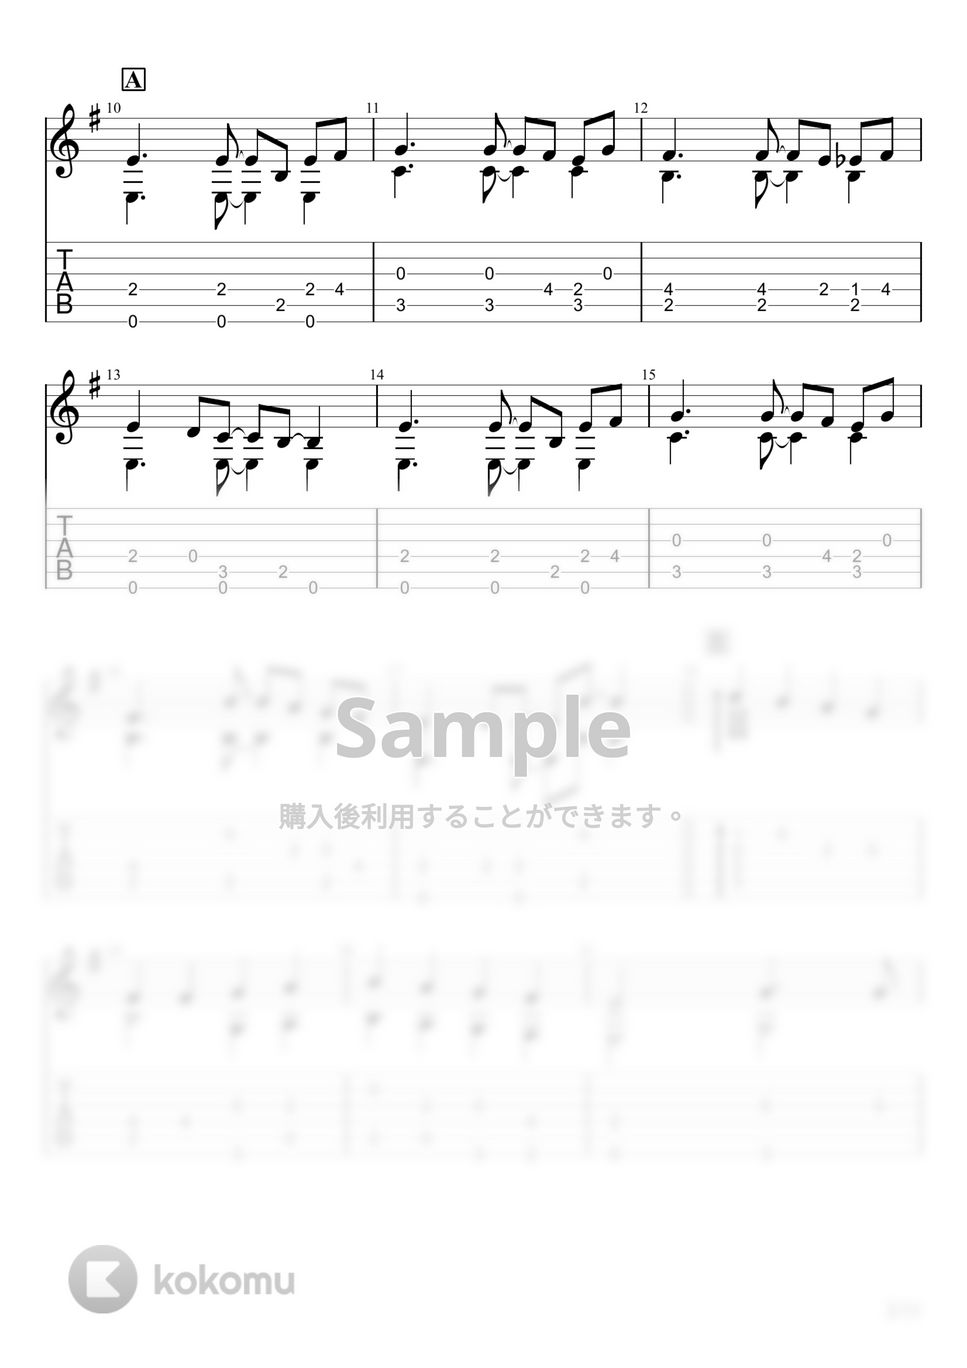 Kanaria - アイデンティティ (ソロギター) by u3danchou